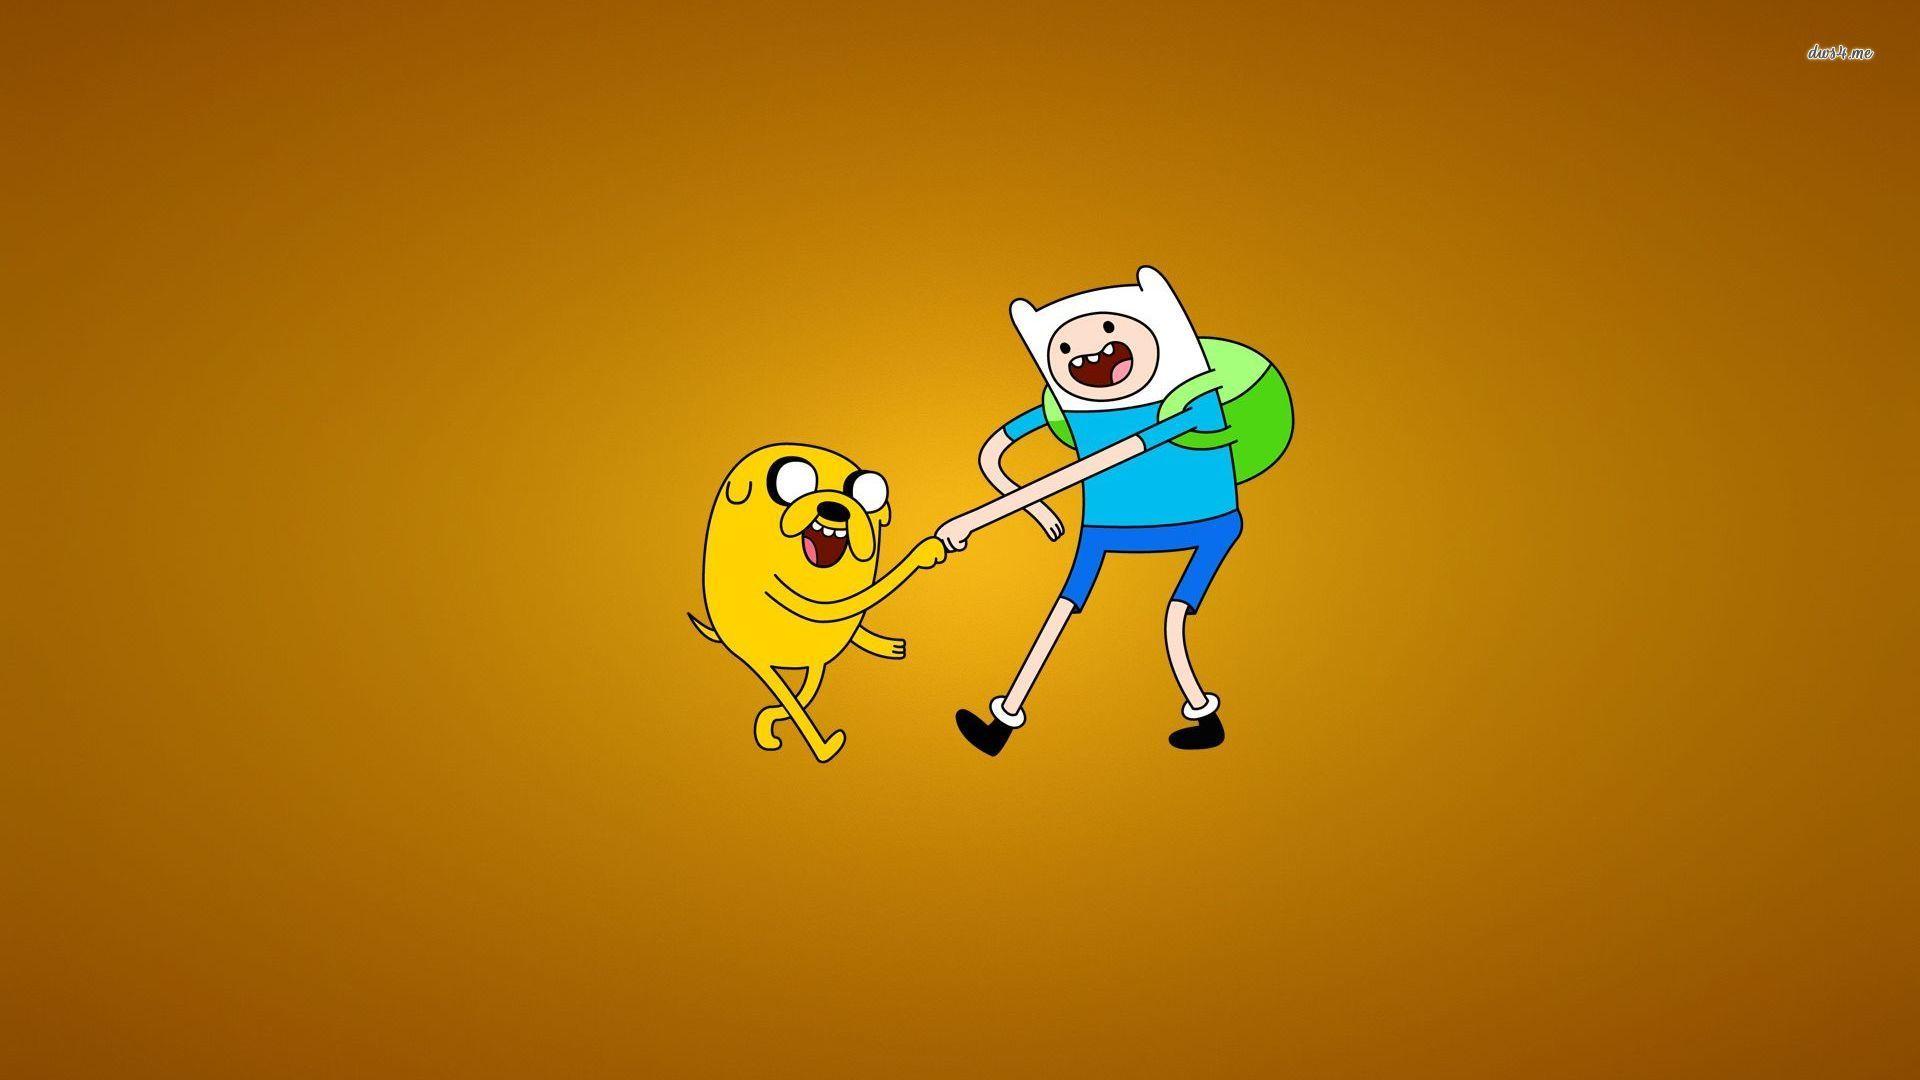 Adventure Time and Finn fist bumping wallpaper